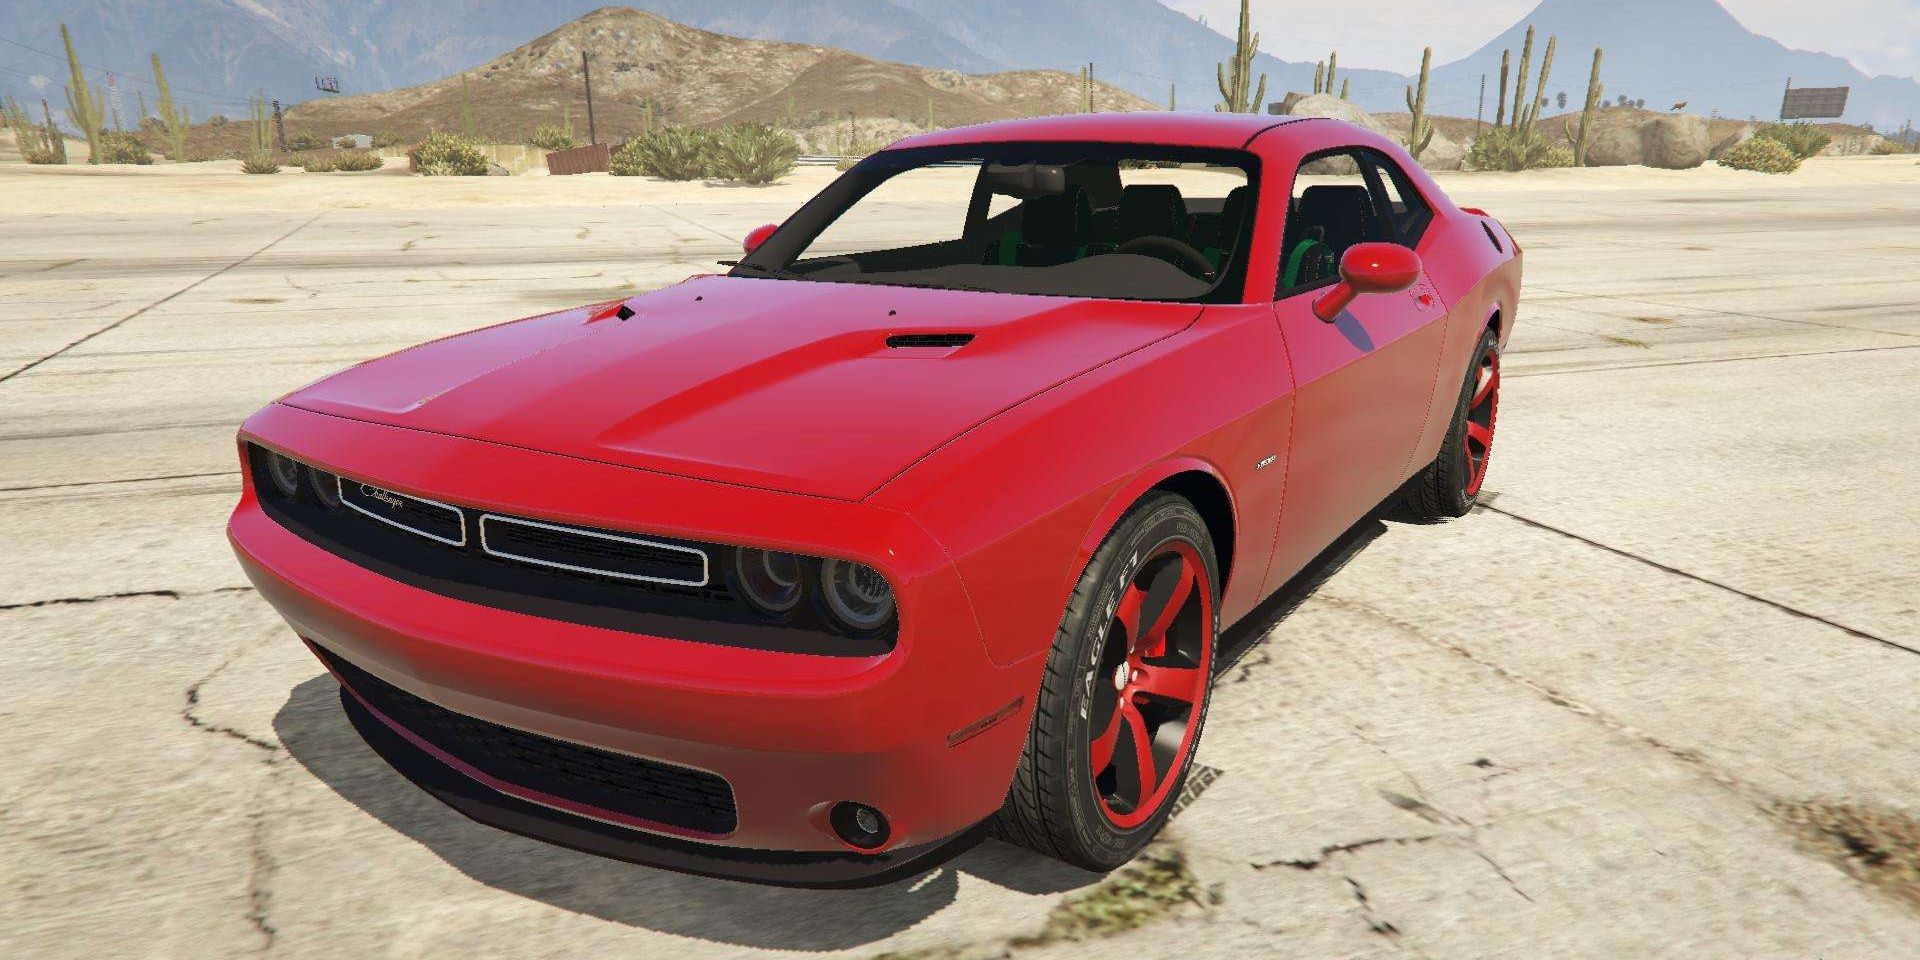 Dodge Challenger mod for GTA V